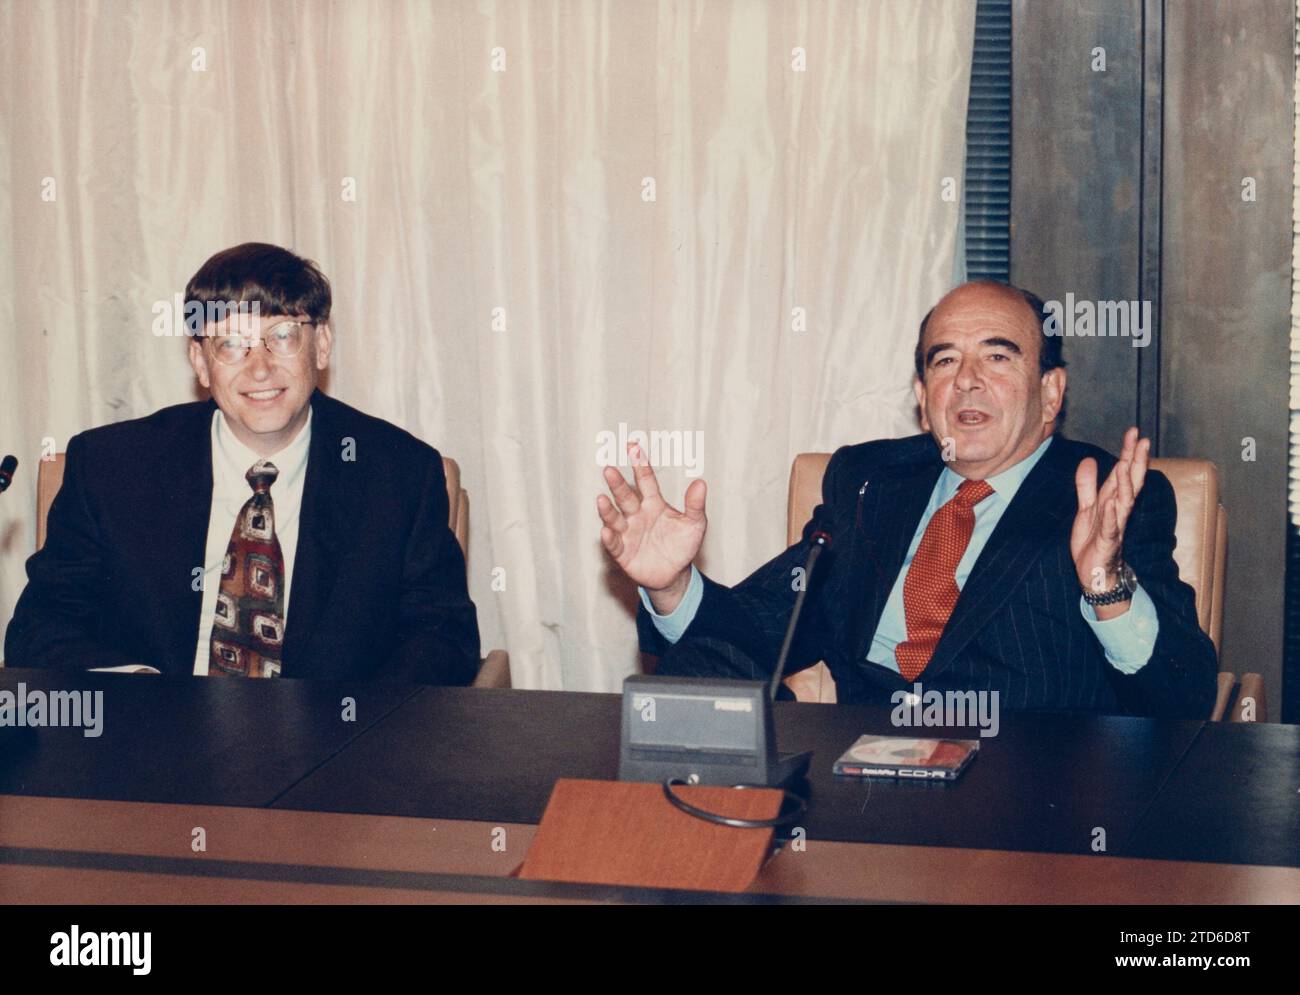 Madrid, 02.06.1997. Bill Gates mit Emilio Botín. Quelle: Album / Archivo ABC / Ramón Prieto Stockfoto